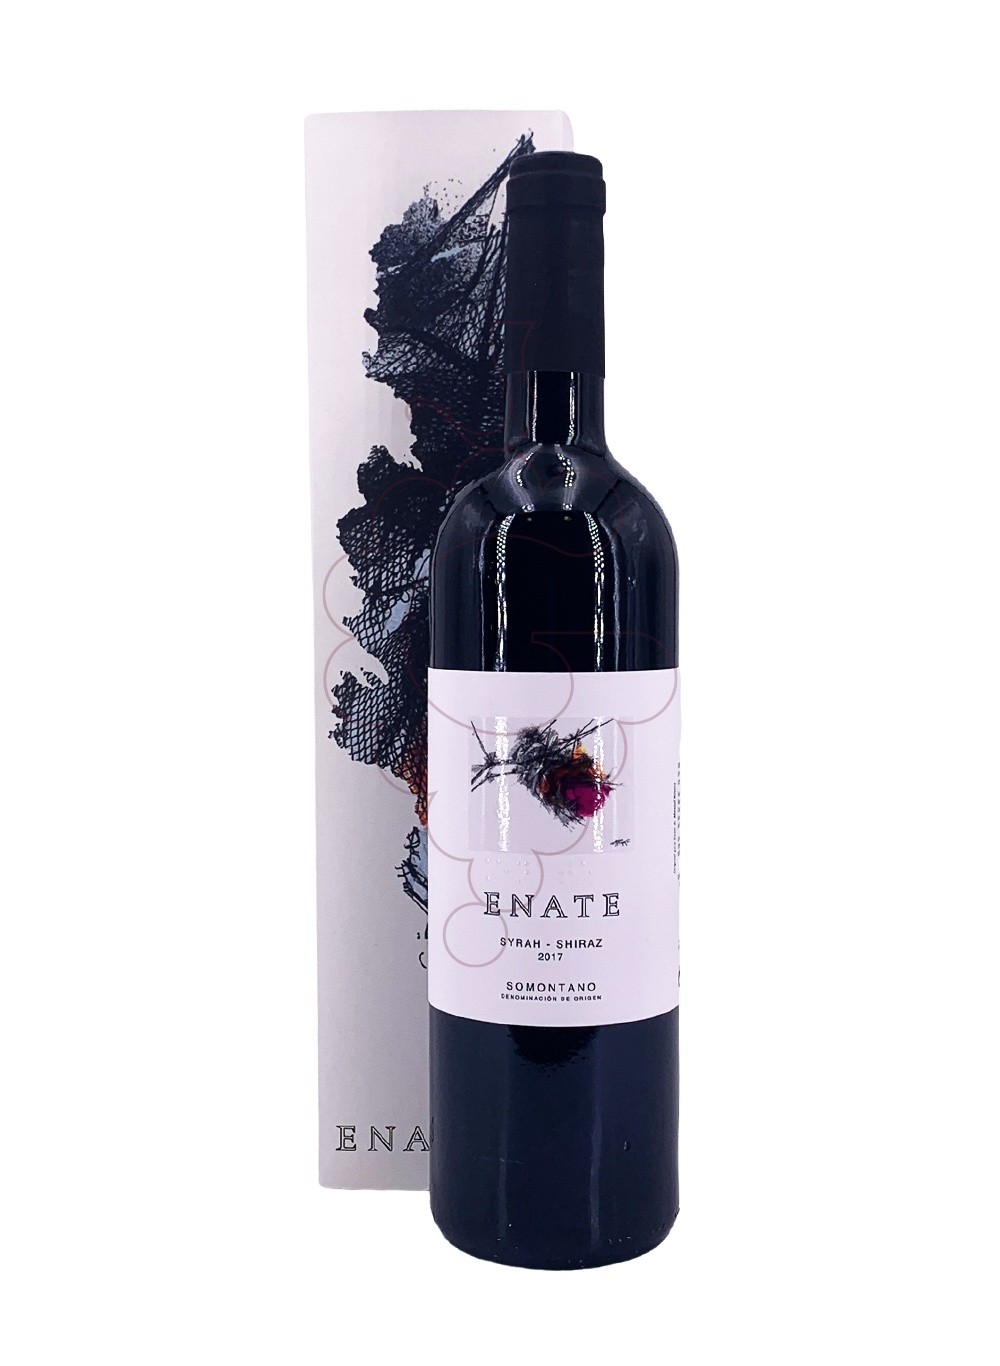 Photo Enate Syrah - Shiraz red wine